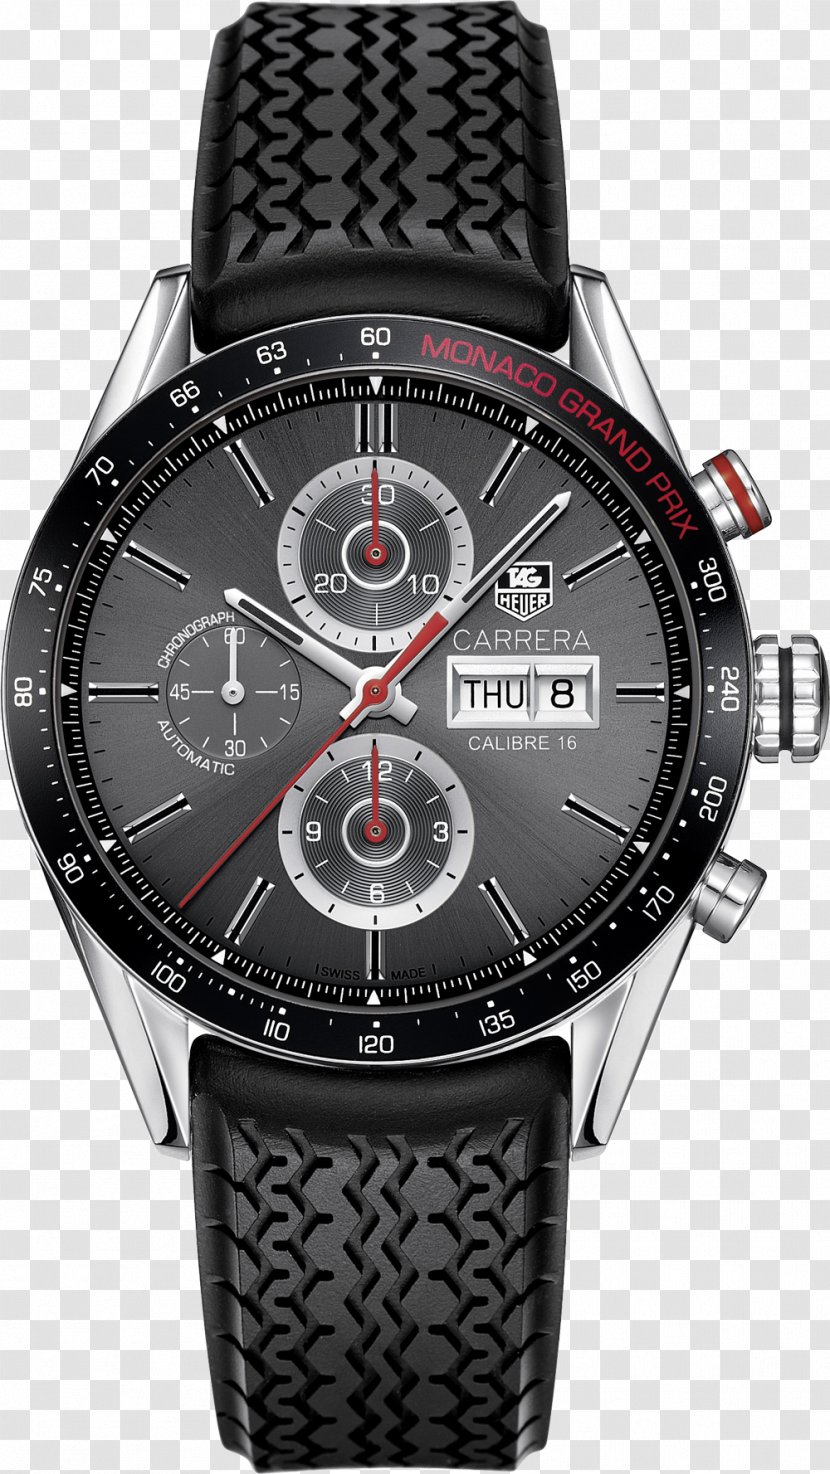 Monaco Grand Prix Chronograph TAG Heuer Watch Transparent PNG